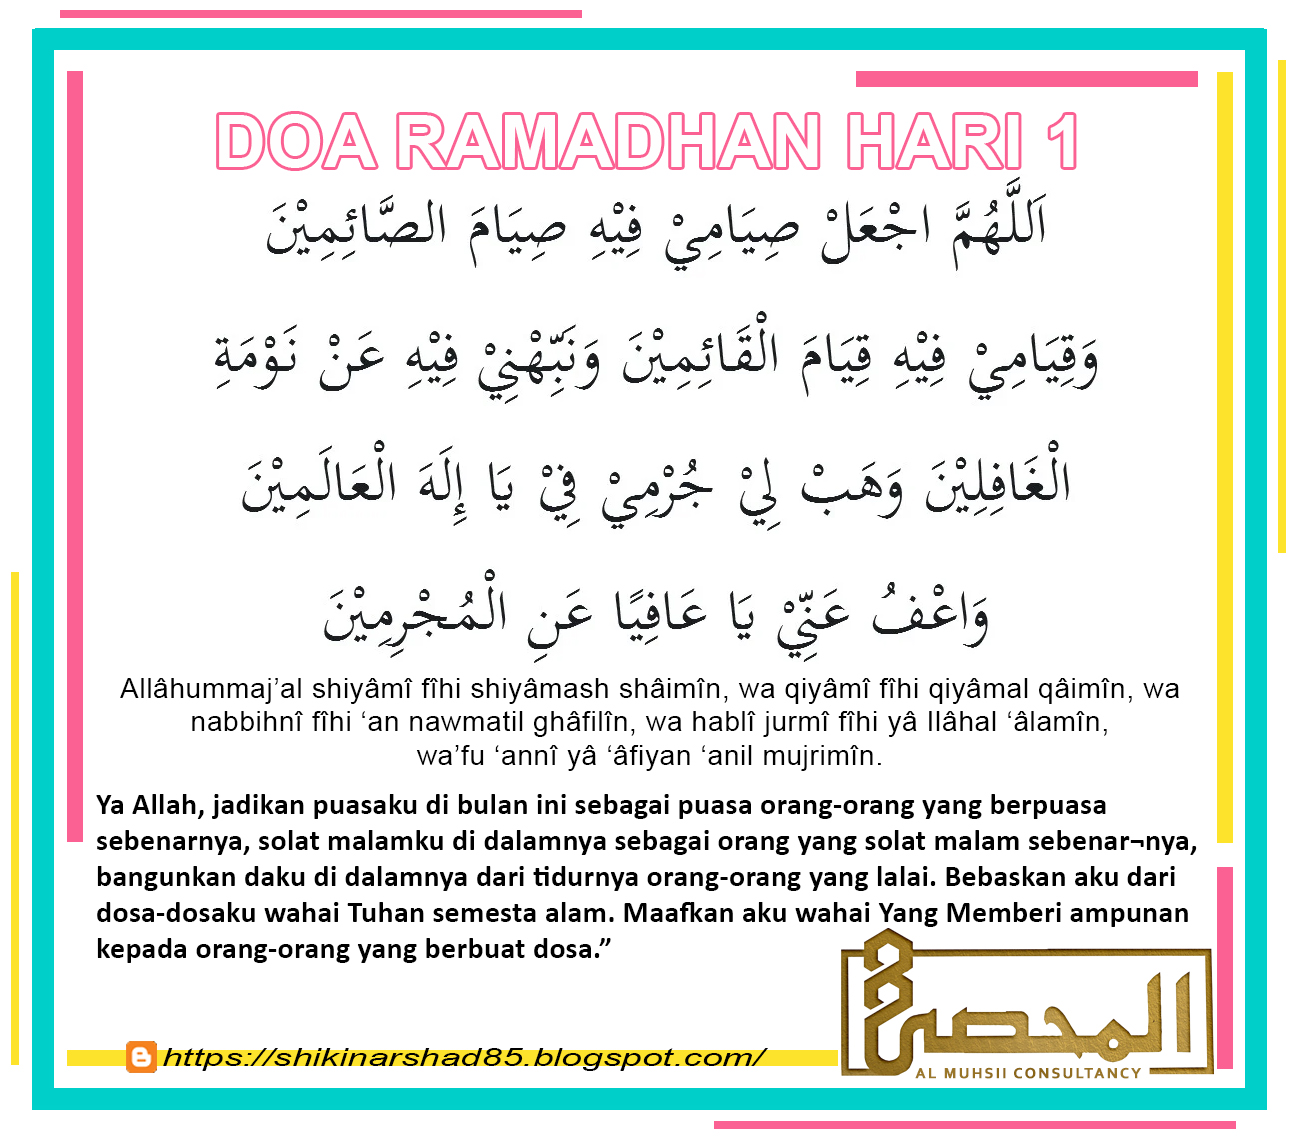 Doa bulan ramadhan